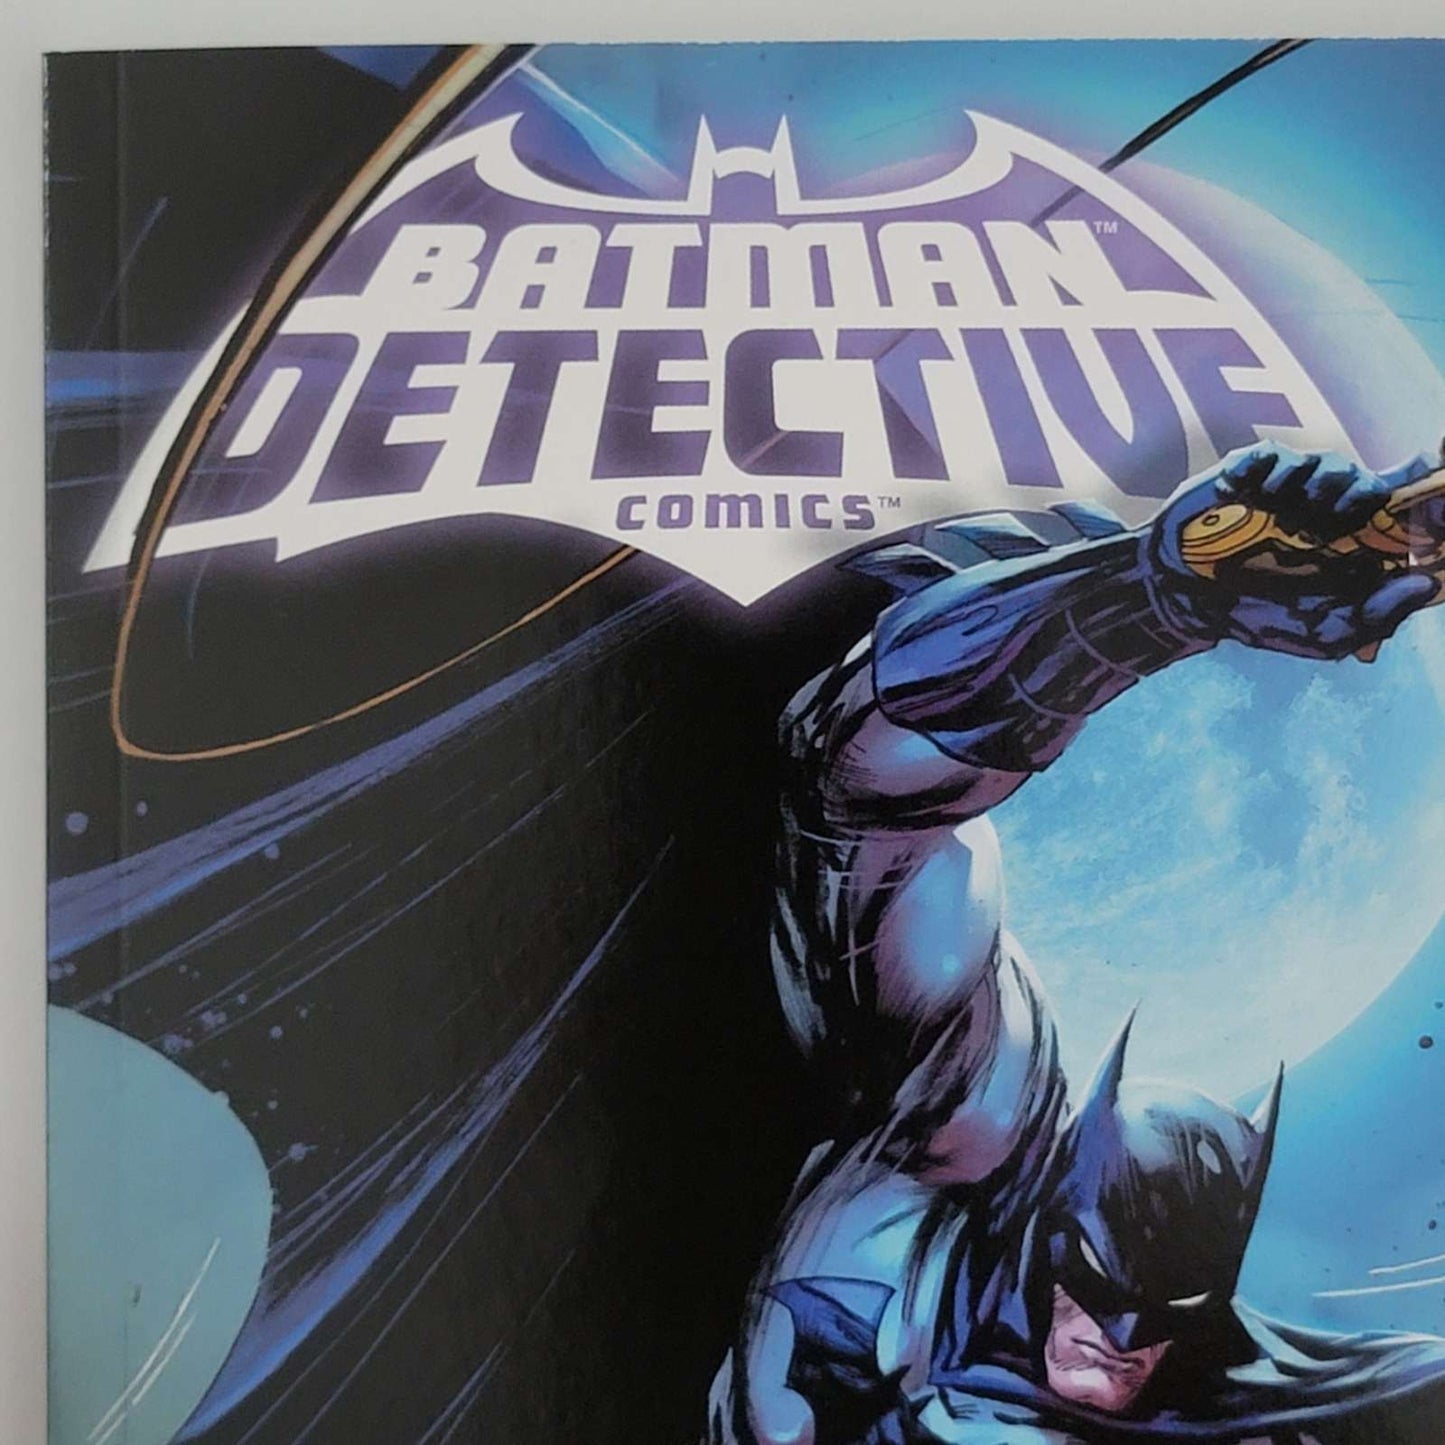 Detective Comics #1027 Tyler Kirkham Cover A